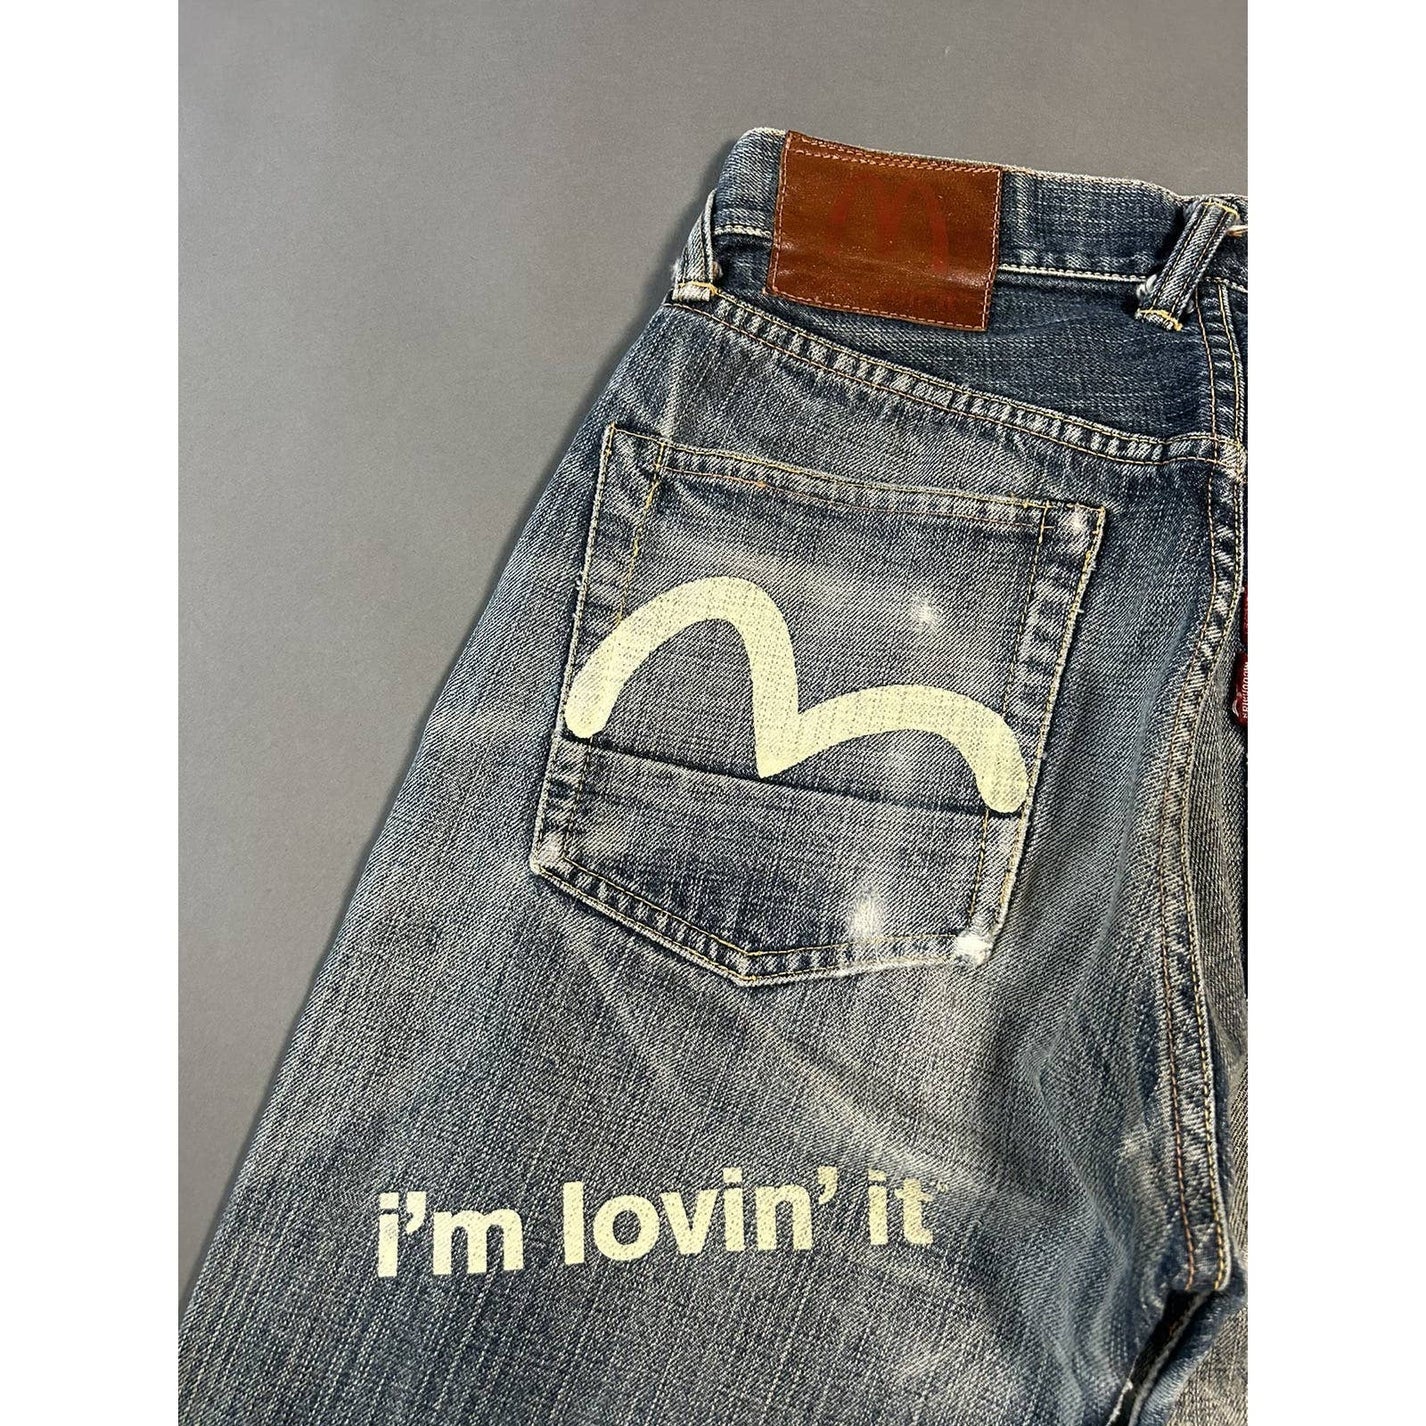 Evisu x McDonalds Denim Jeans I’m Lovin' It Selvedge Lodz Polska tyl2